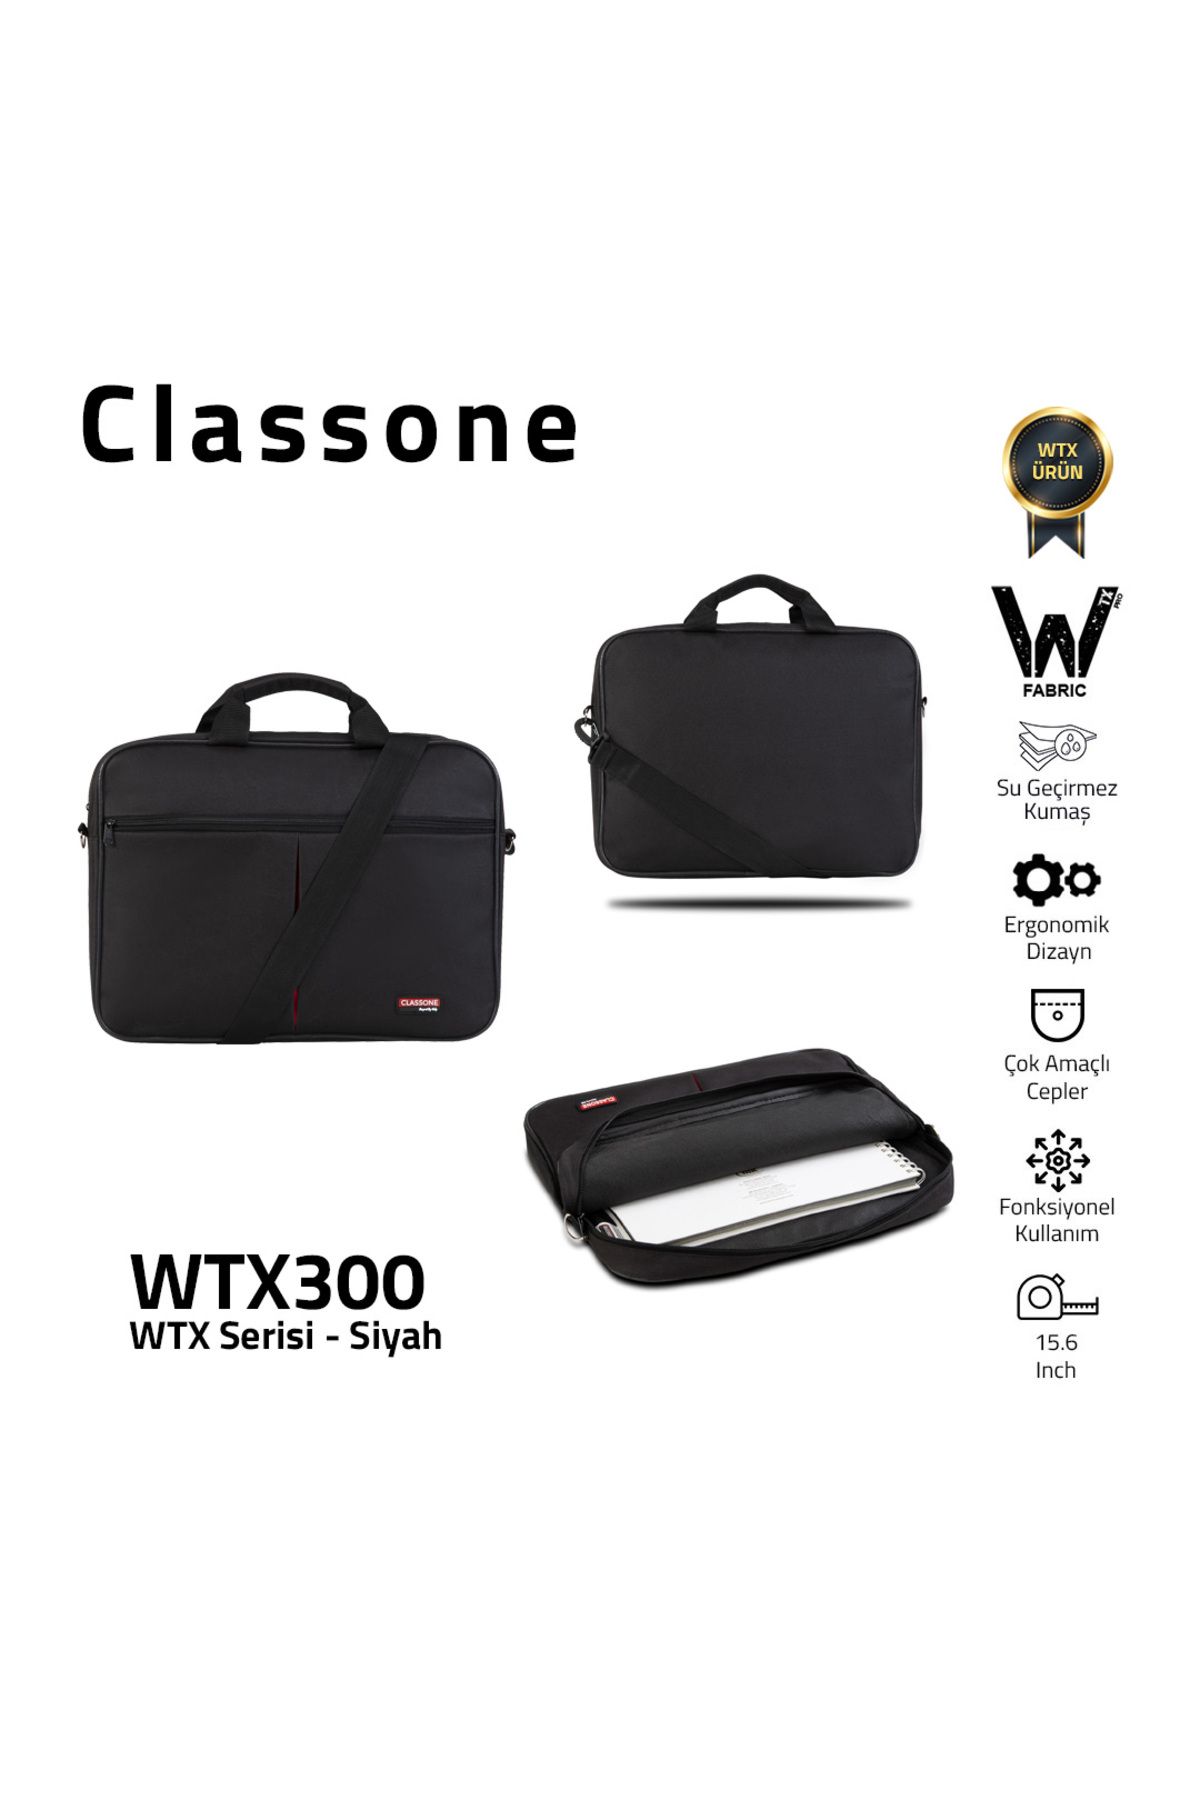 Classone WTX300 WTXpro Serisi 15.6 inch Uyumlu Su Geçirmez Kumaş Macbook, Laptop , Notebook El Çant